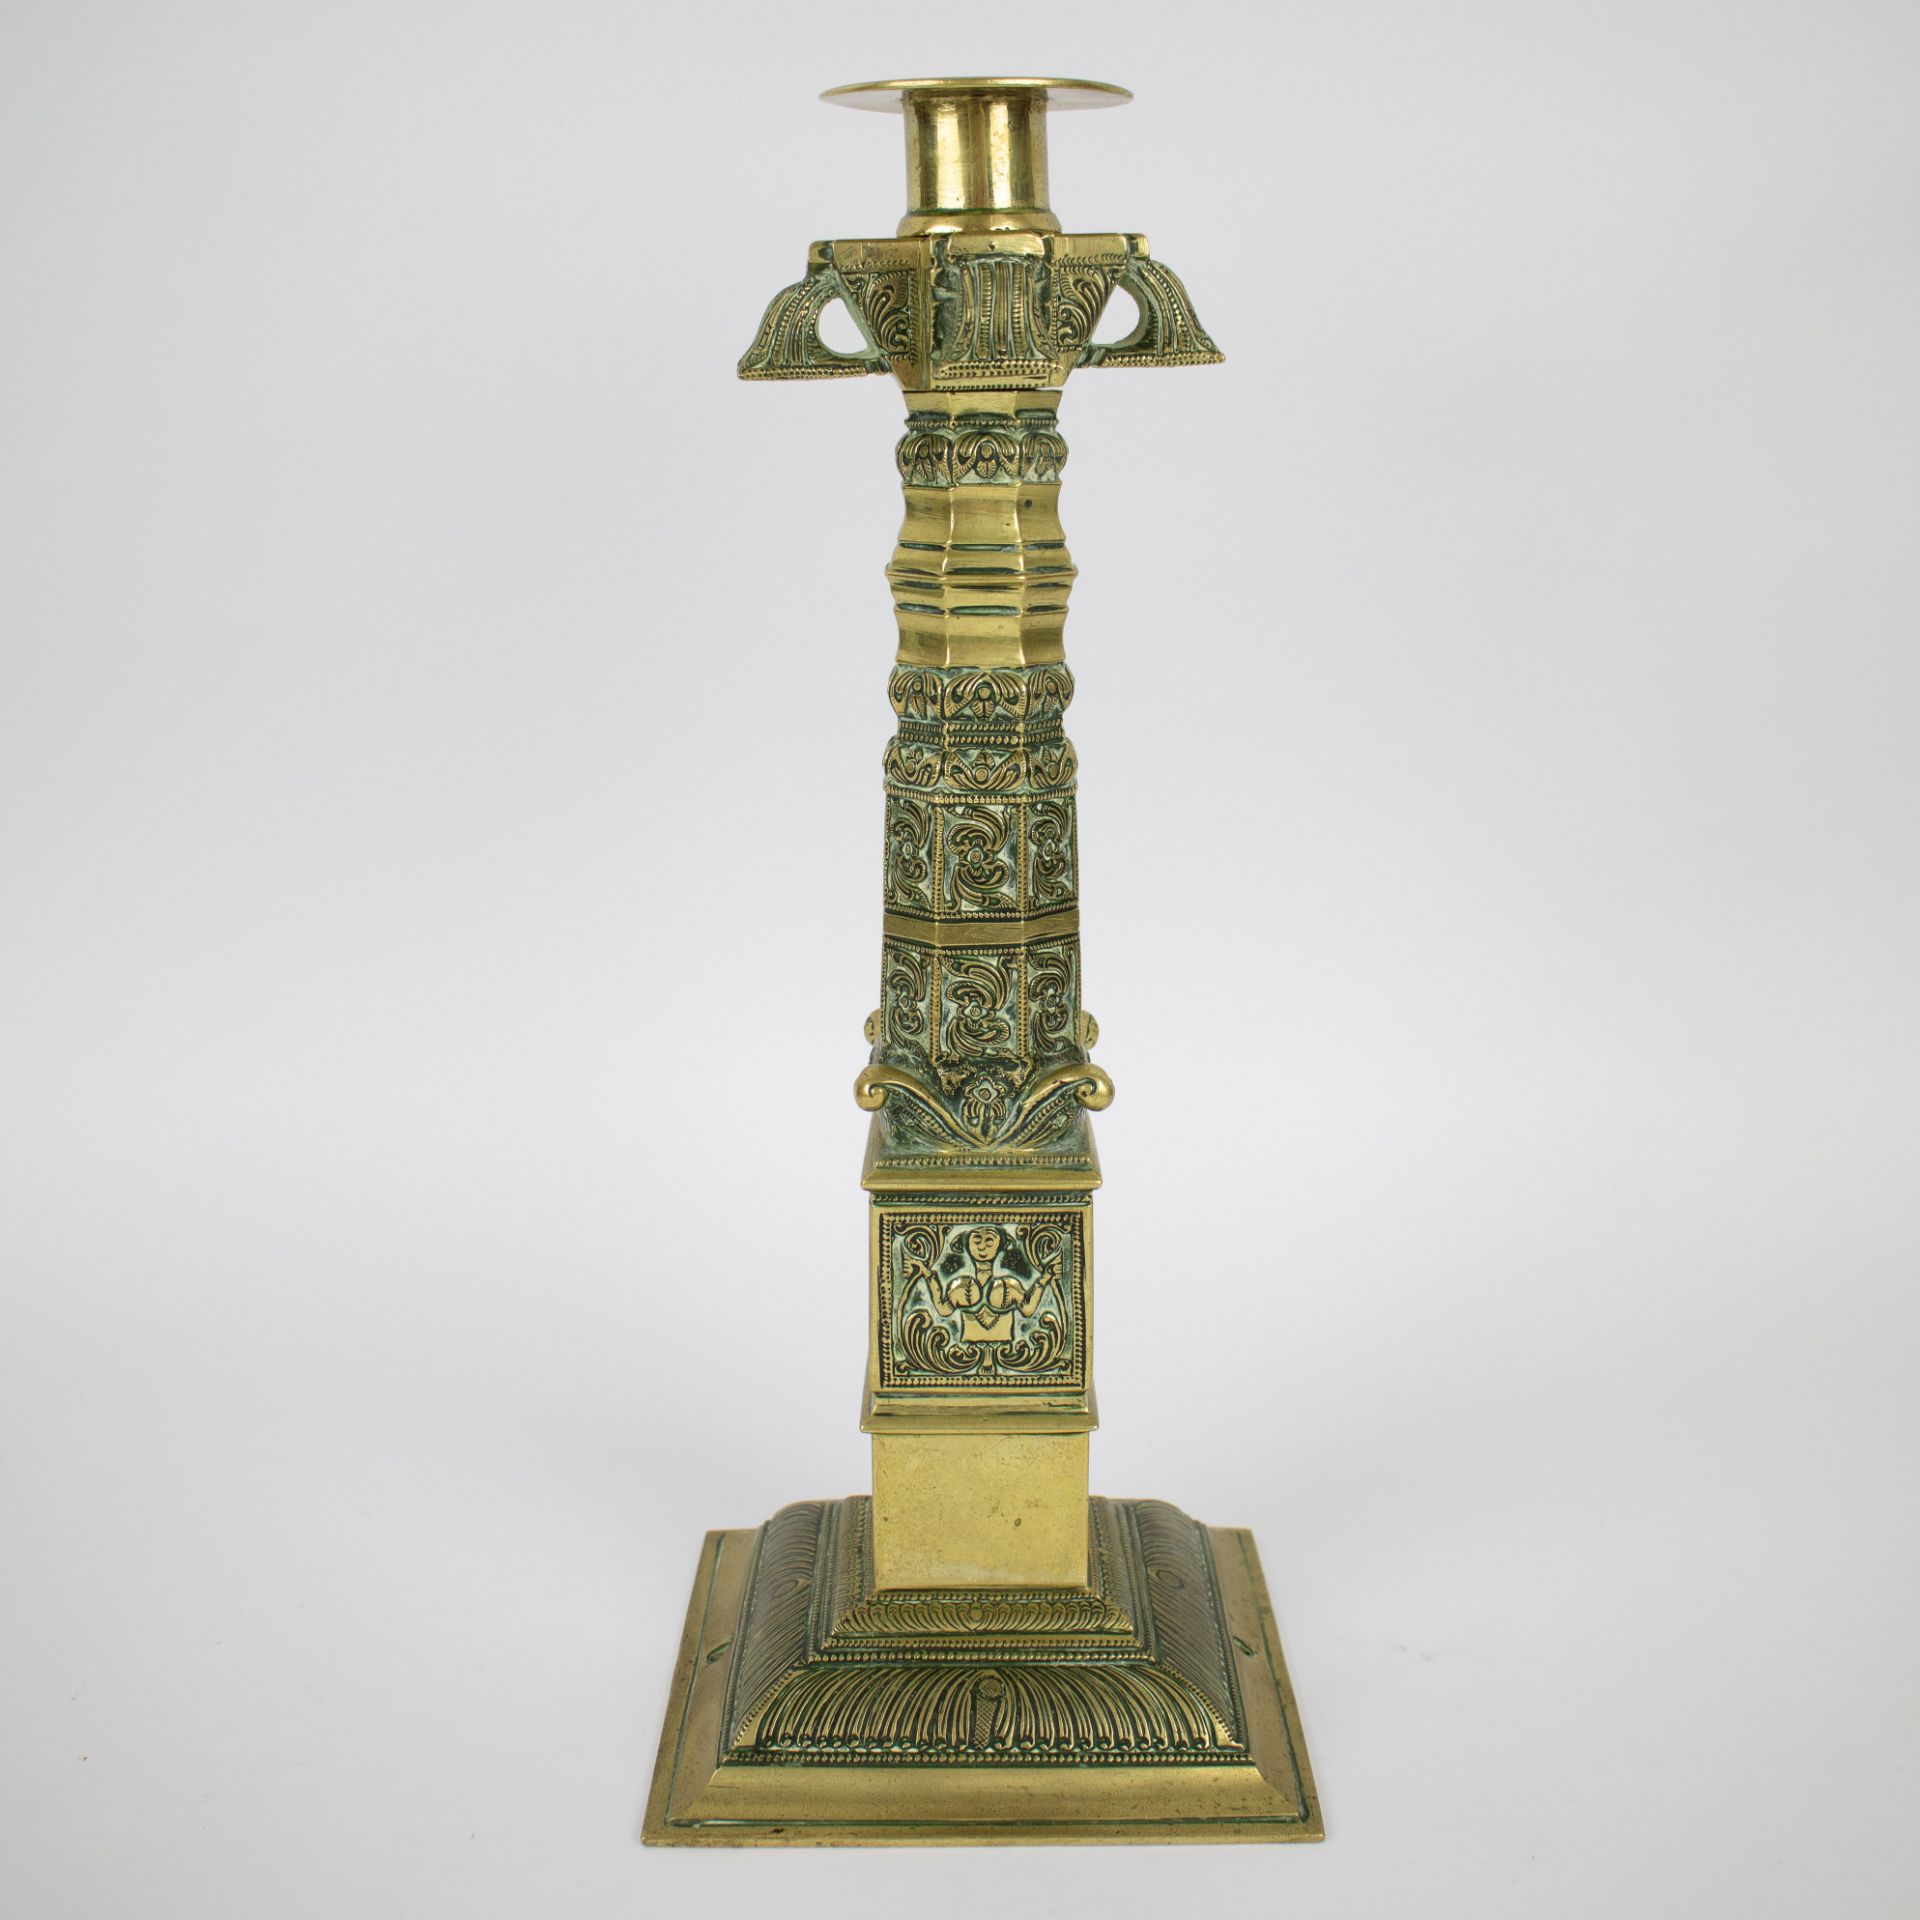 Bronze candlestick Sri Lanka 19th century (from Kandy hamlet) - Image 3 of 5